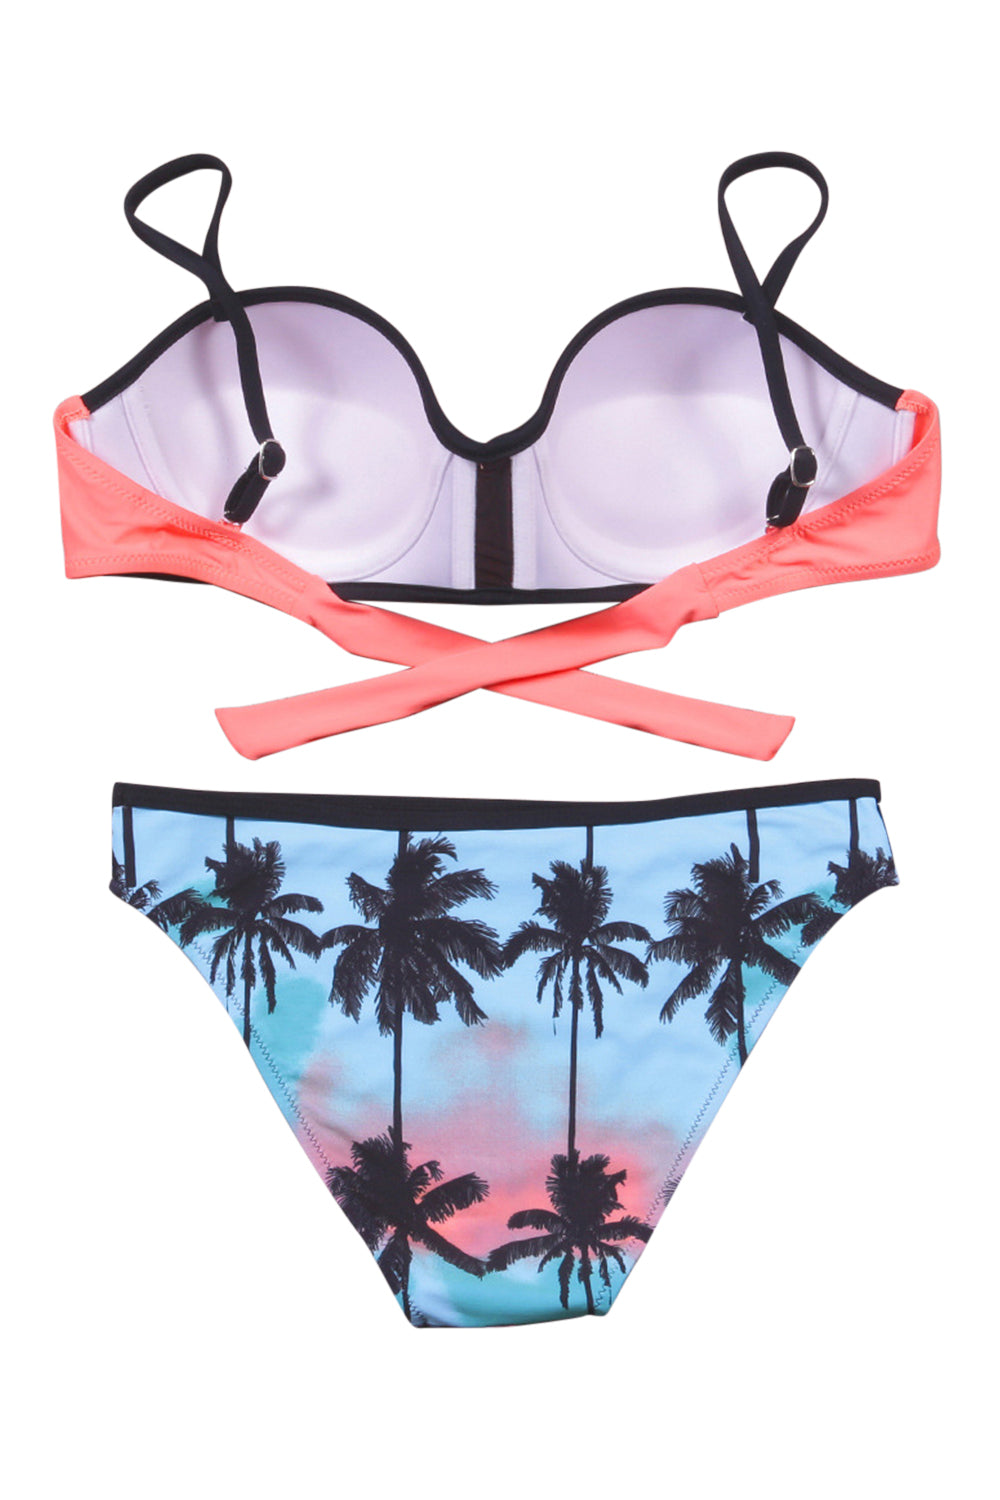 Iyasson Tropical Palm Leaves Printing Bikini Sets